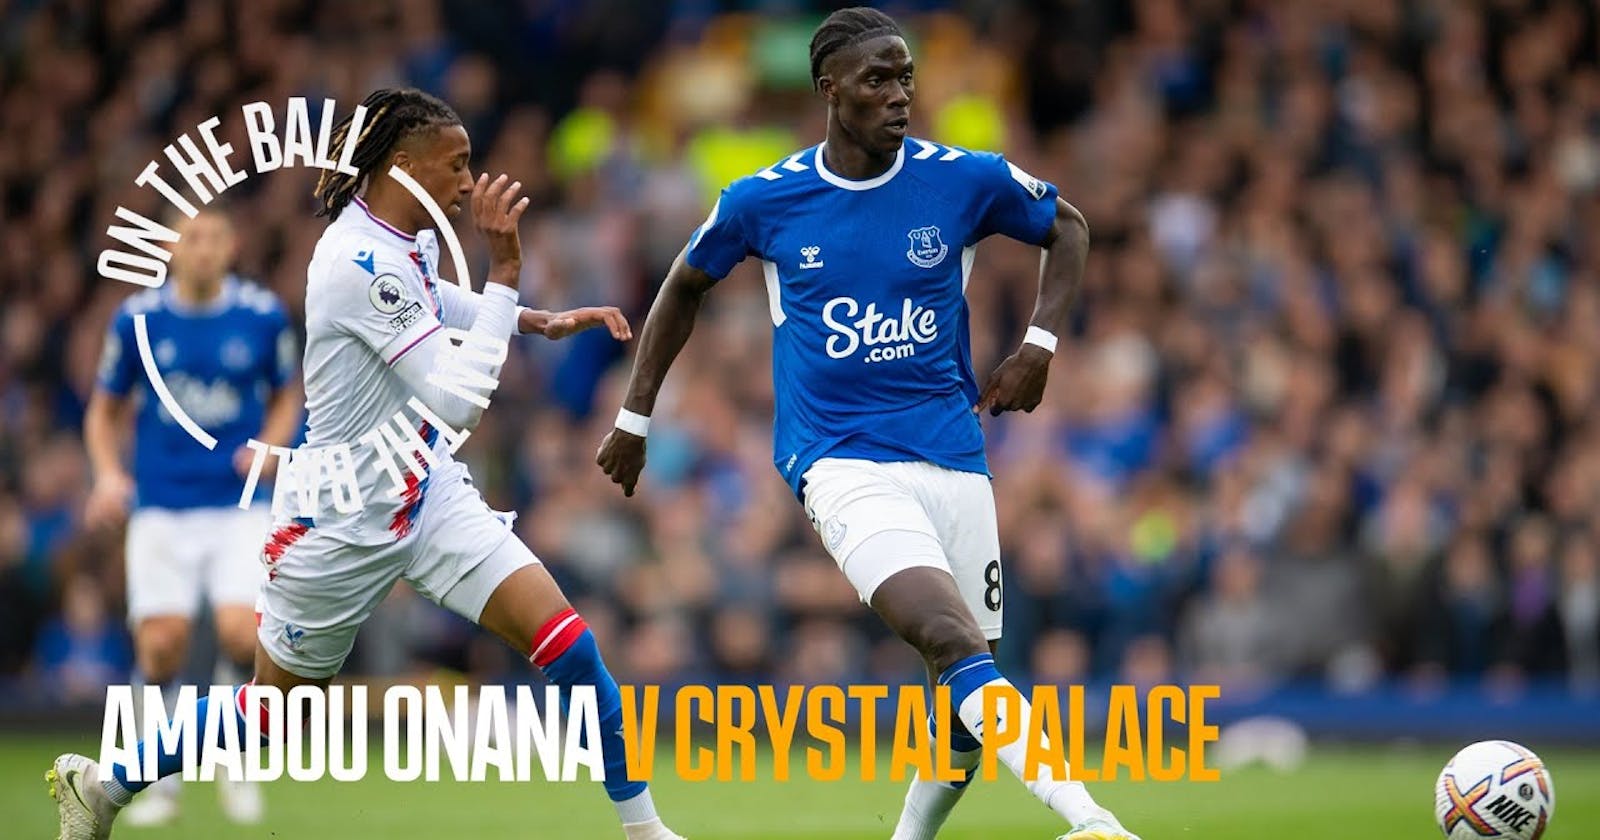 Onana header earns Everton point against Palace